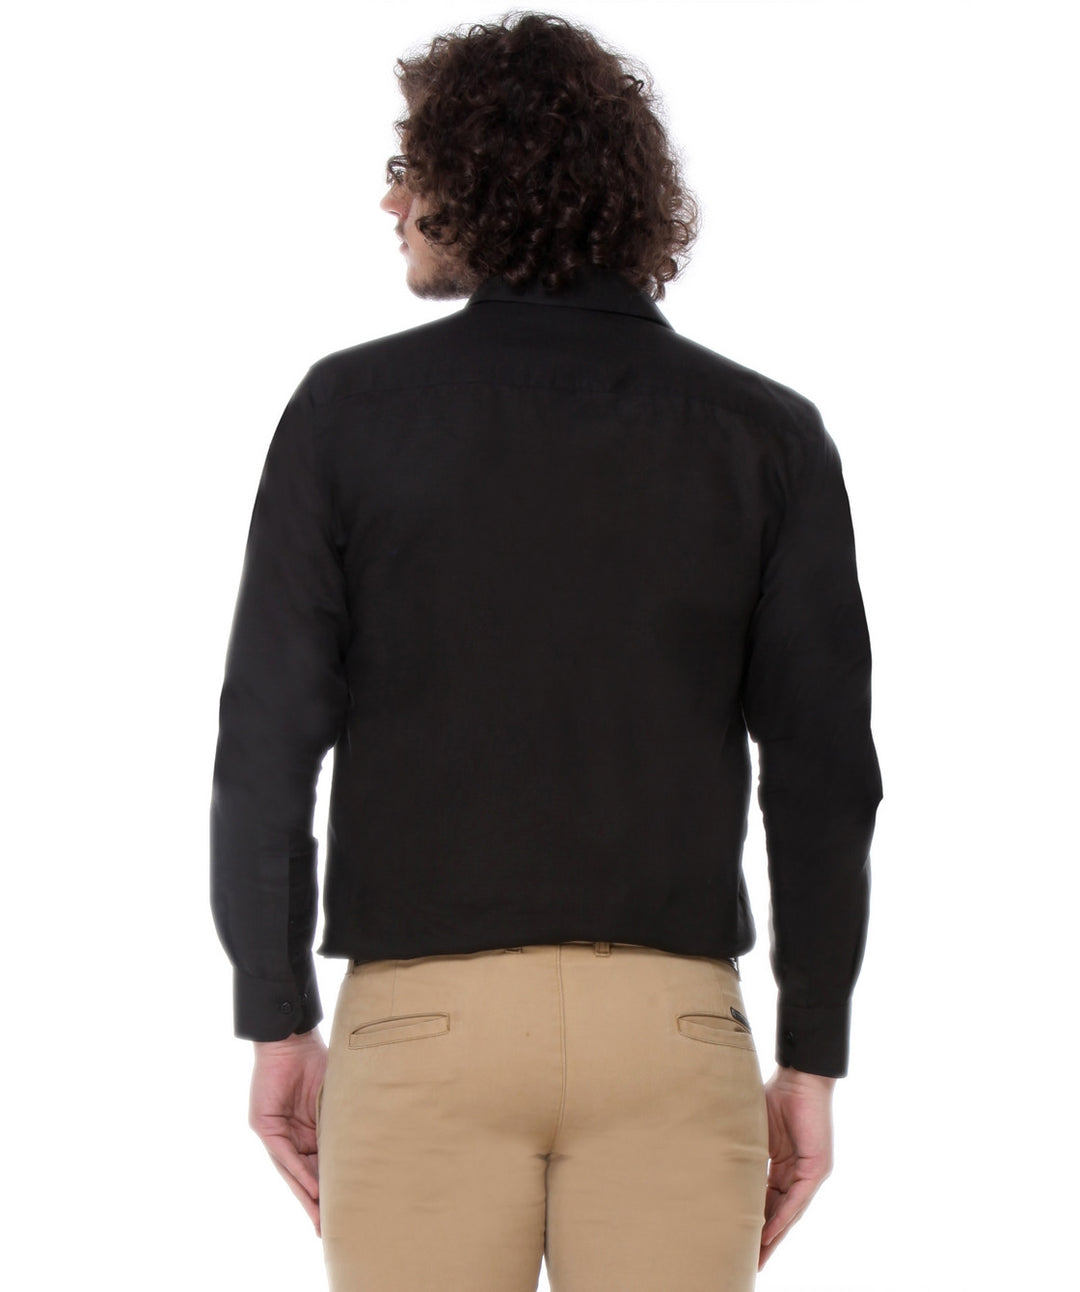 Men Black Regular Fit Solid Cotton Linen Formal Shirt